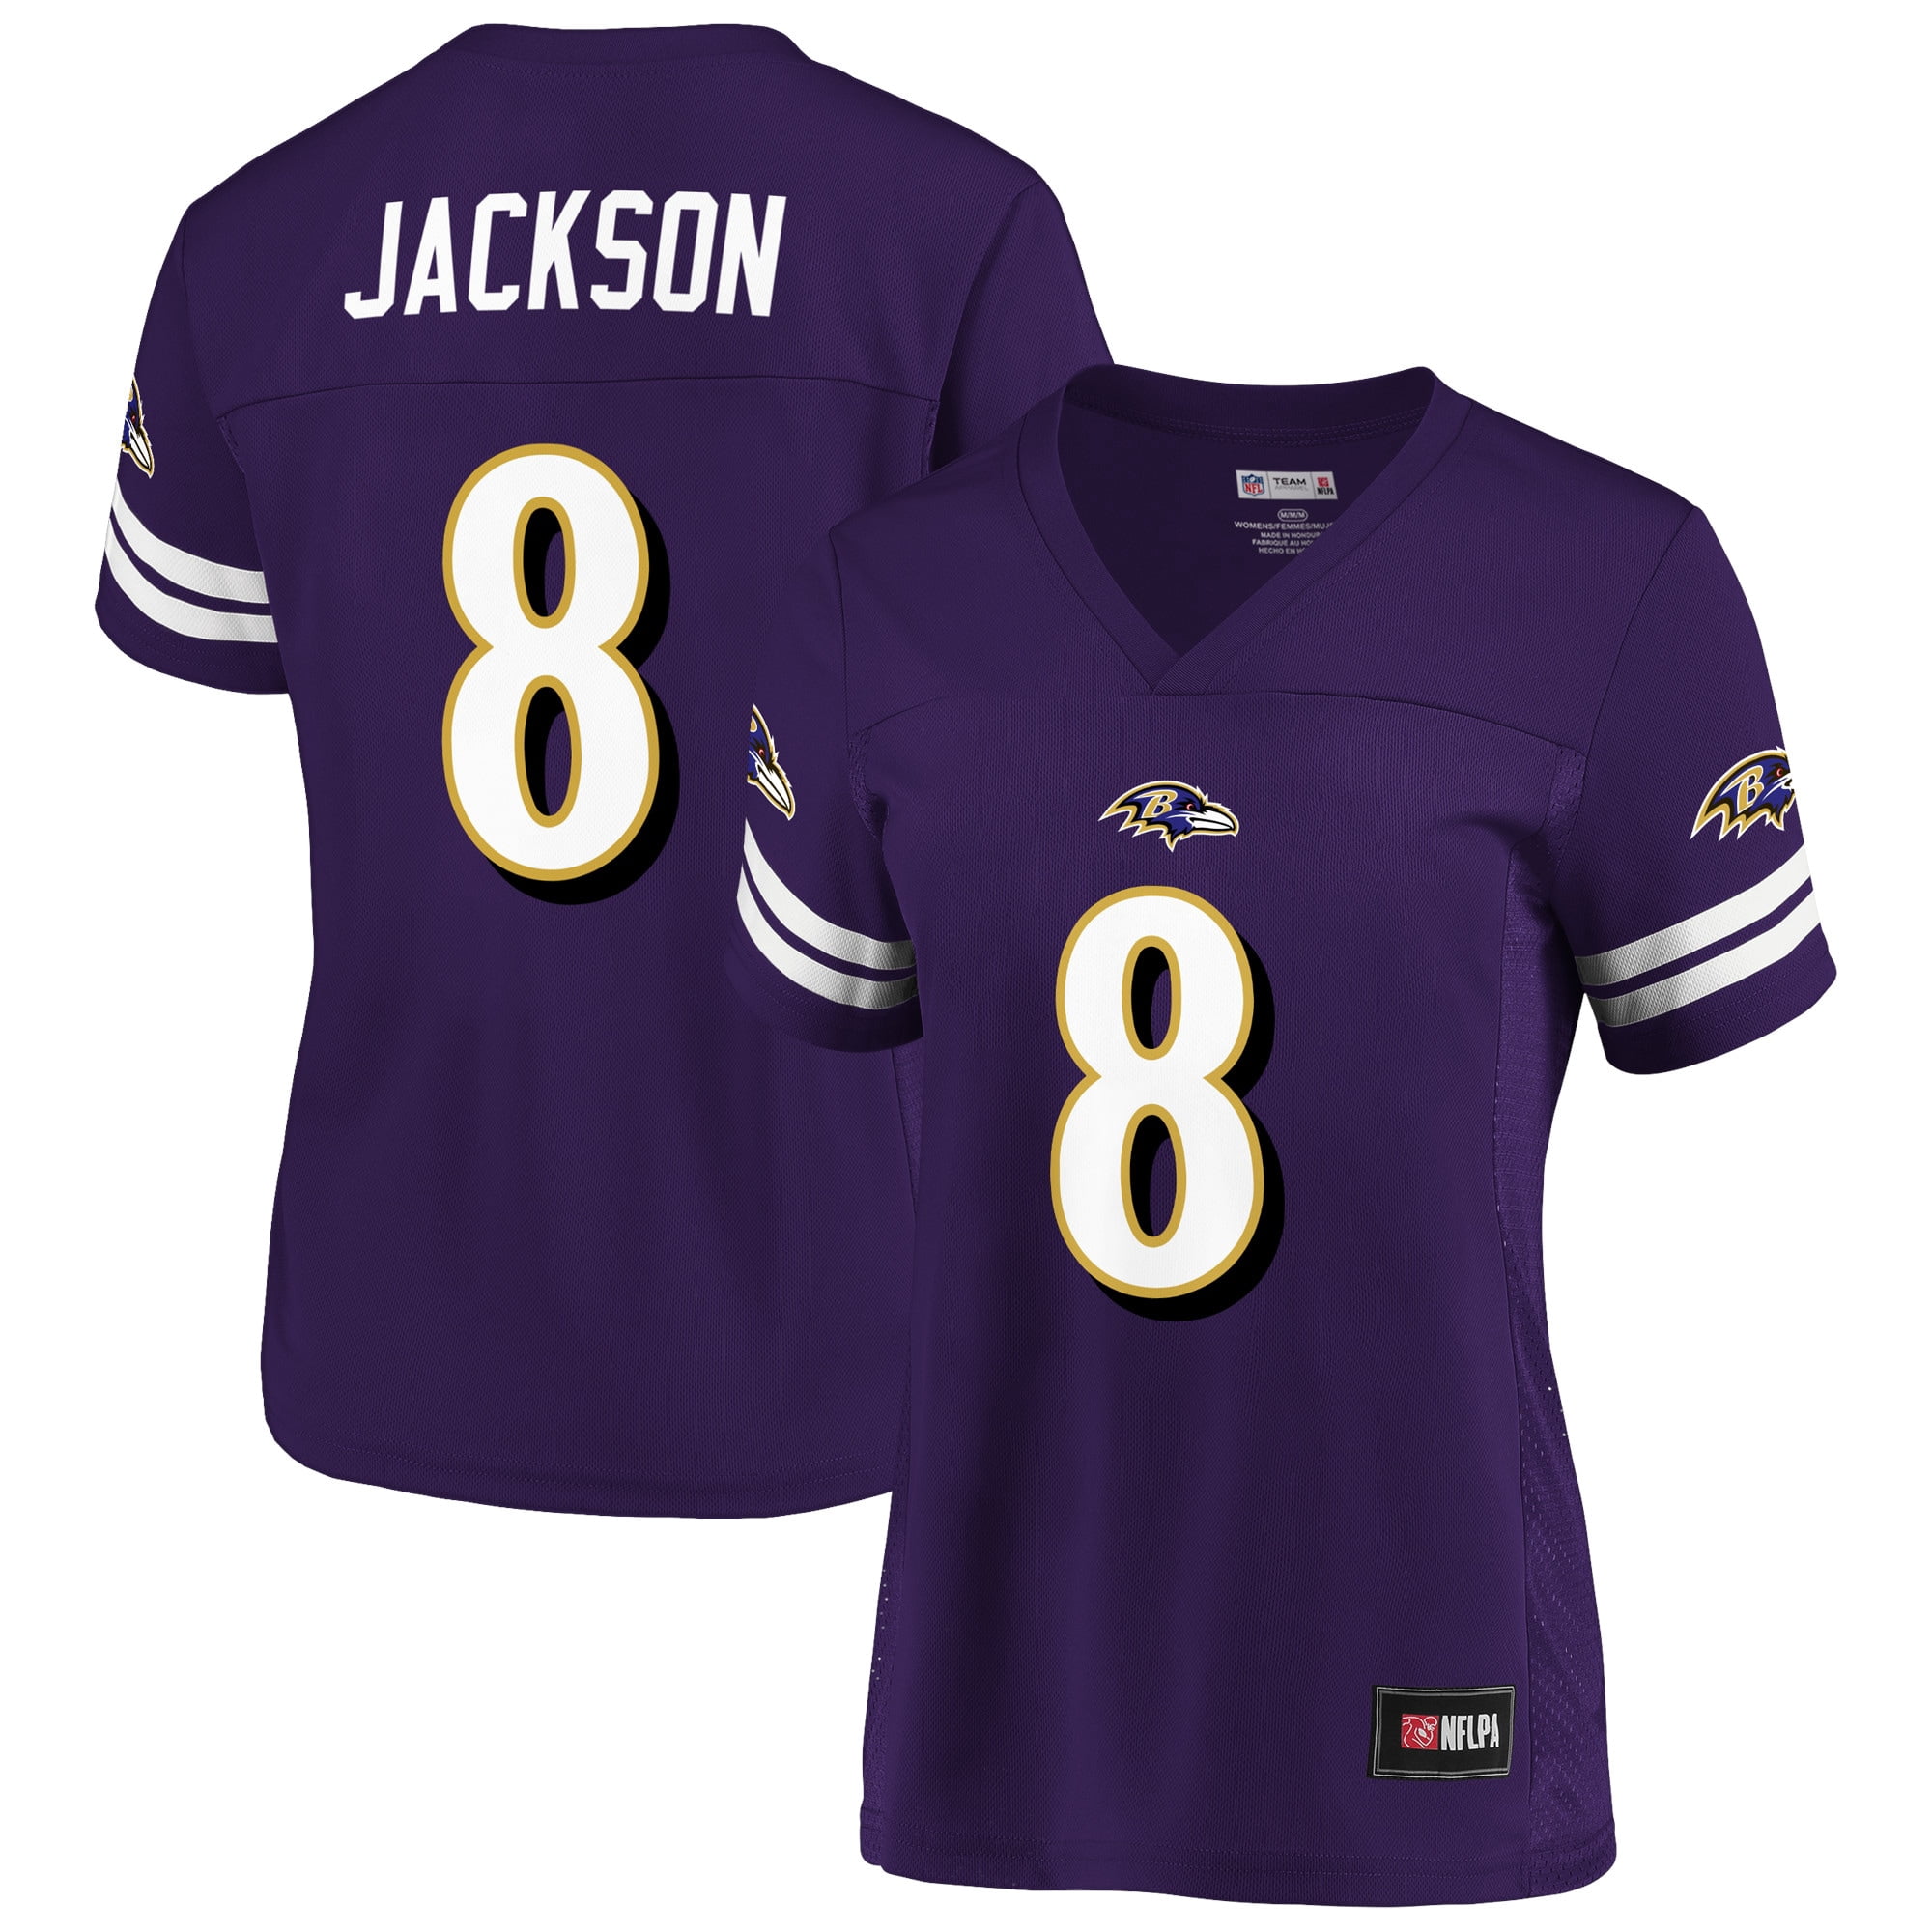 Women's Fanatics Branded Lamar Jackson Purple Baltimore Ravens Player Jersey  